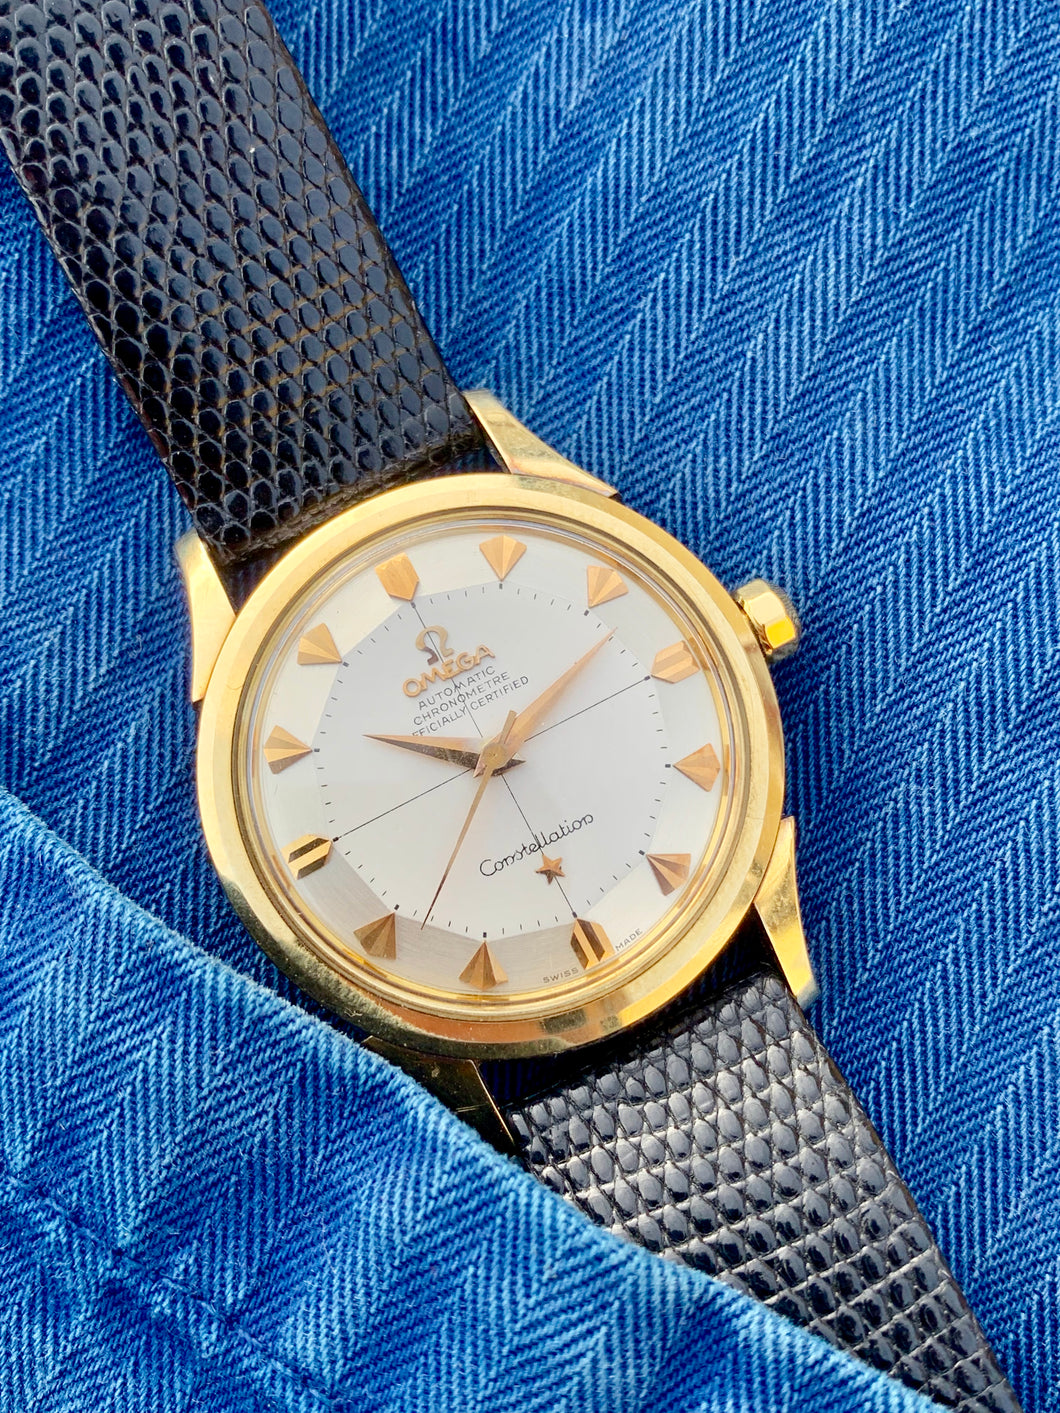 1958 Amazing Omega Constellation Automatic Chronometer “Pie-Pan” arrowhead